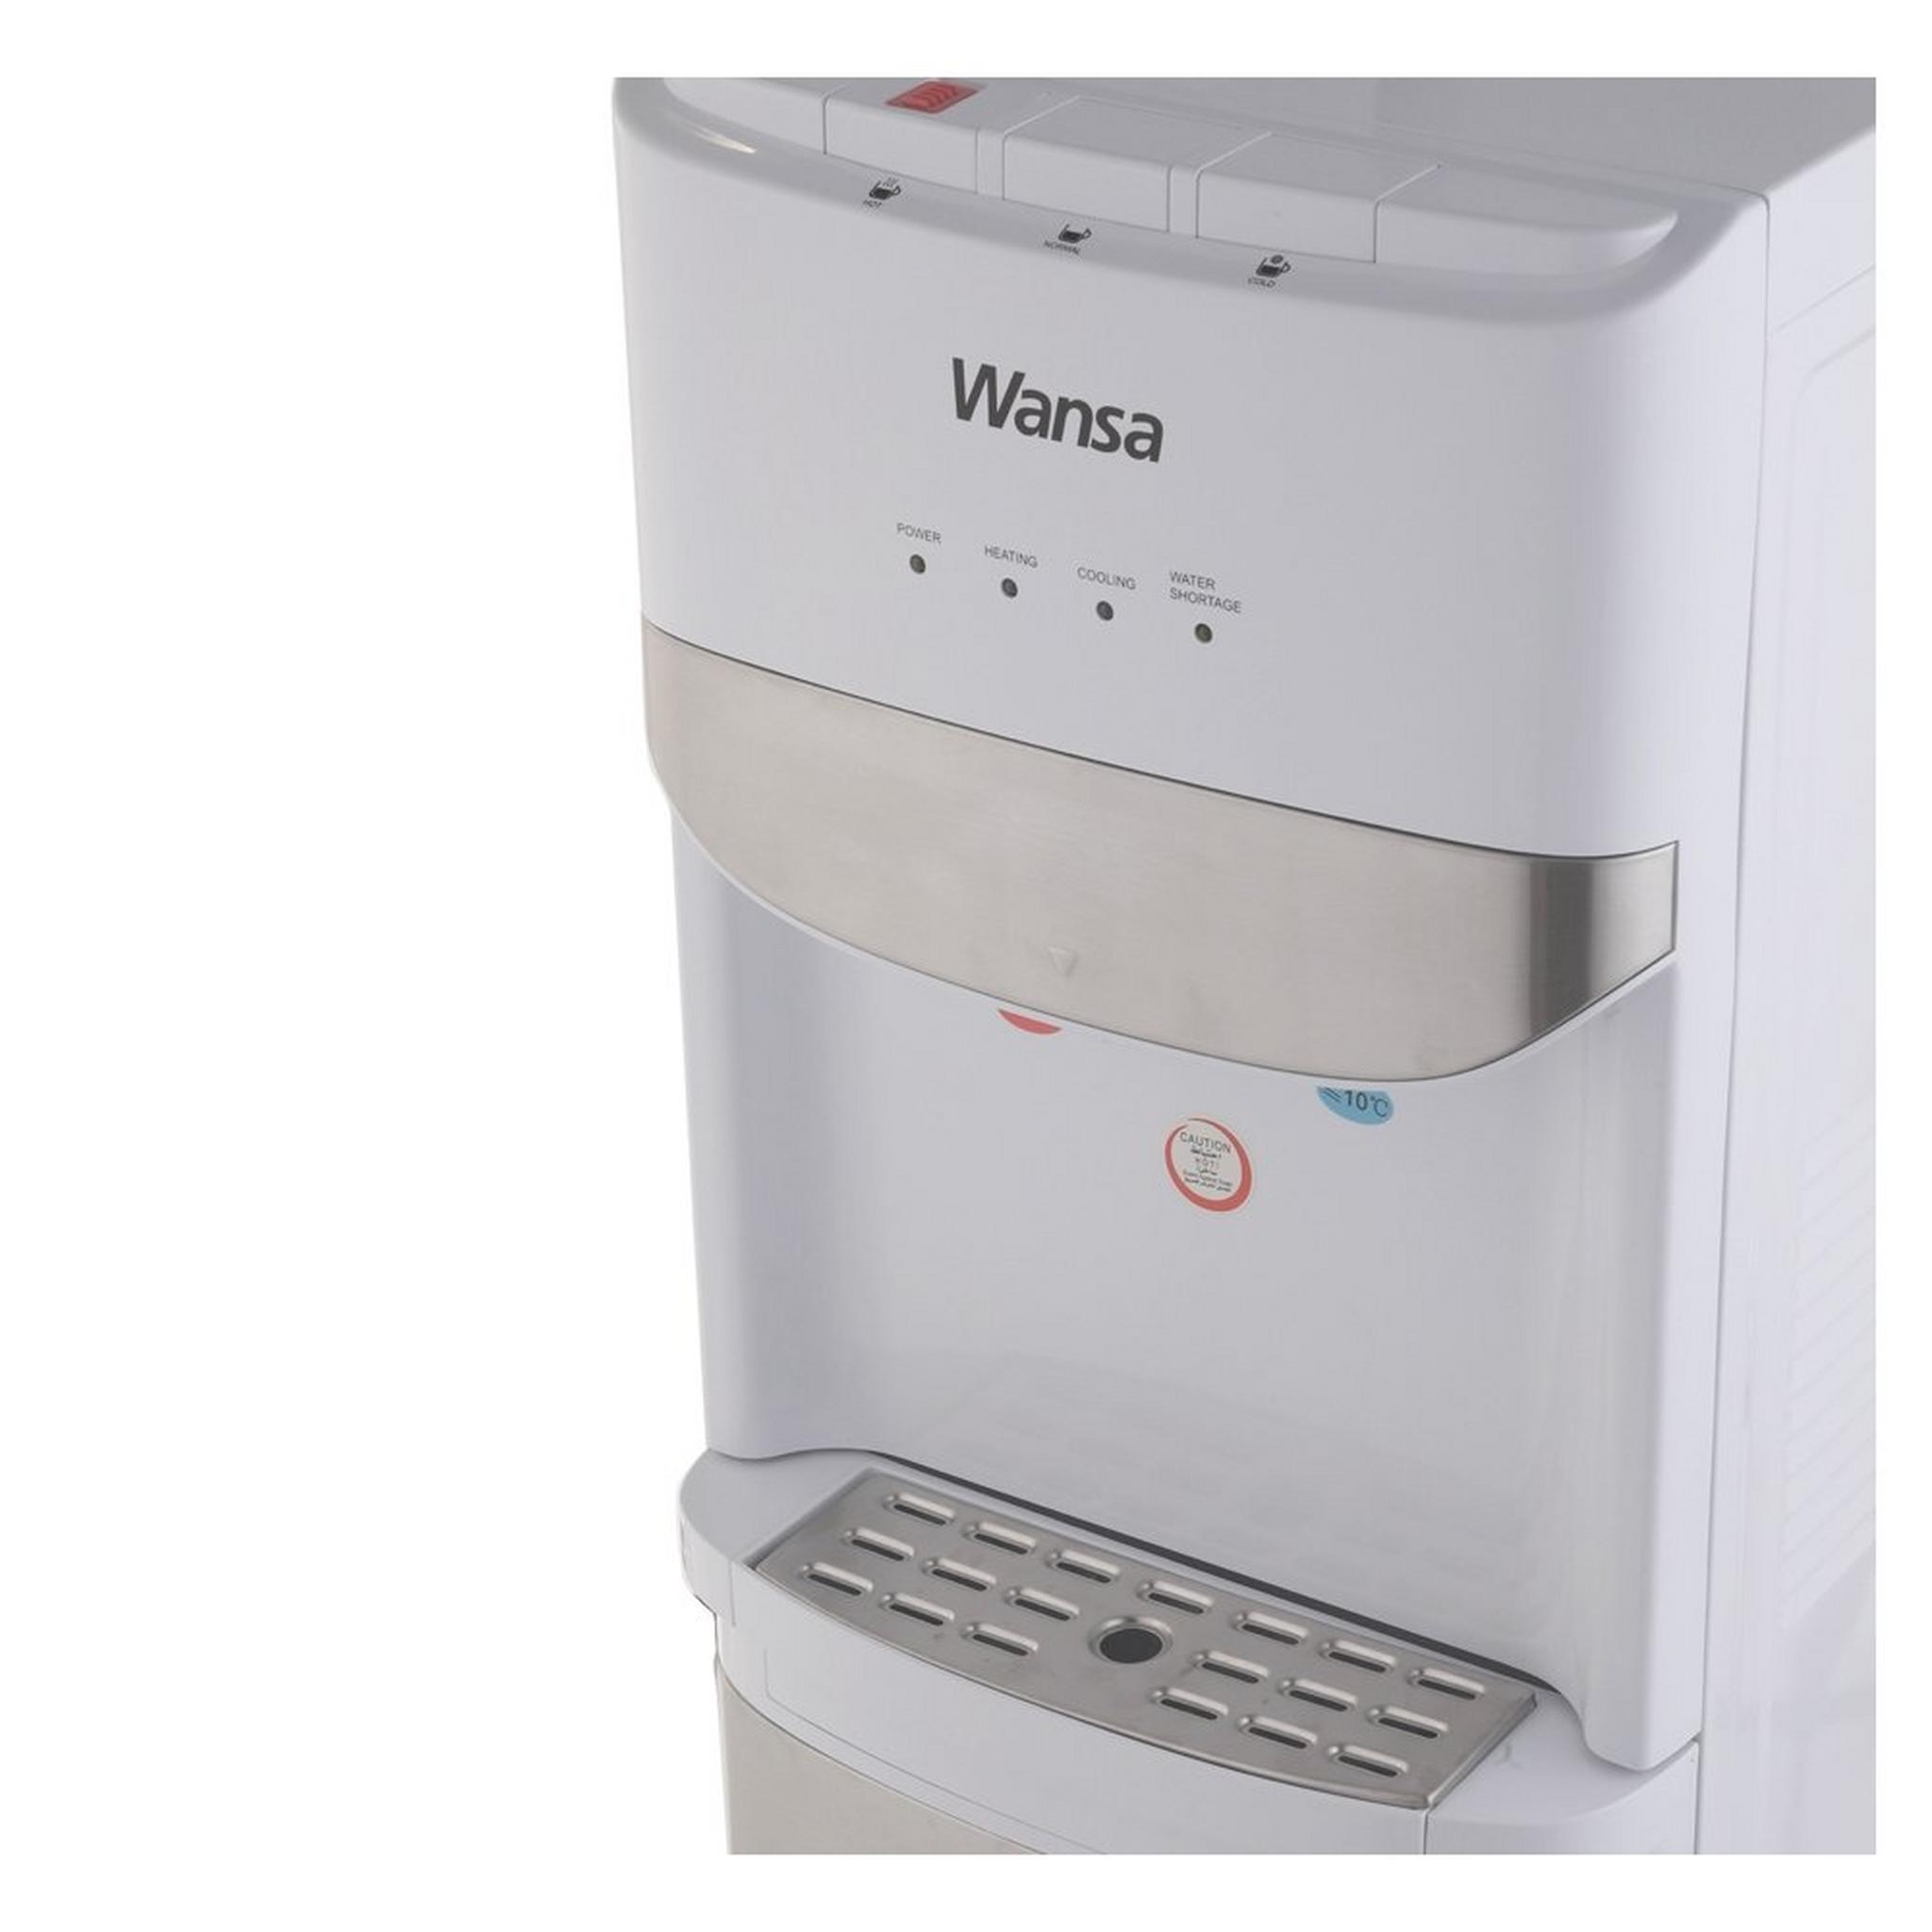 Wansa Water Dispenser (WWD1FSSWTC1) - White